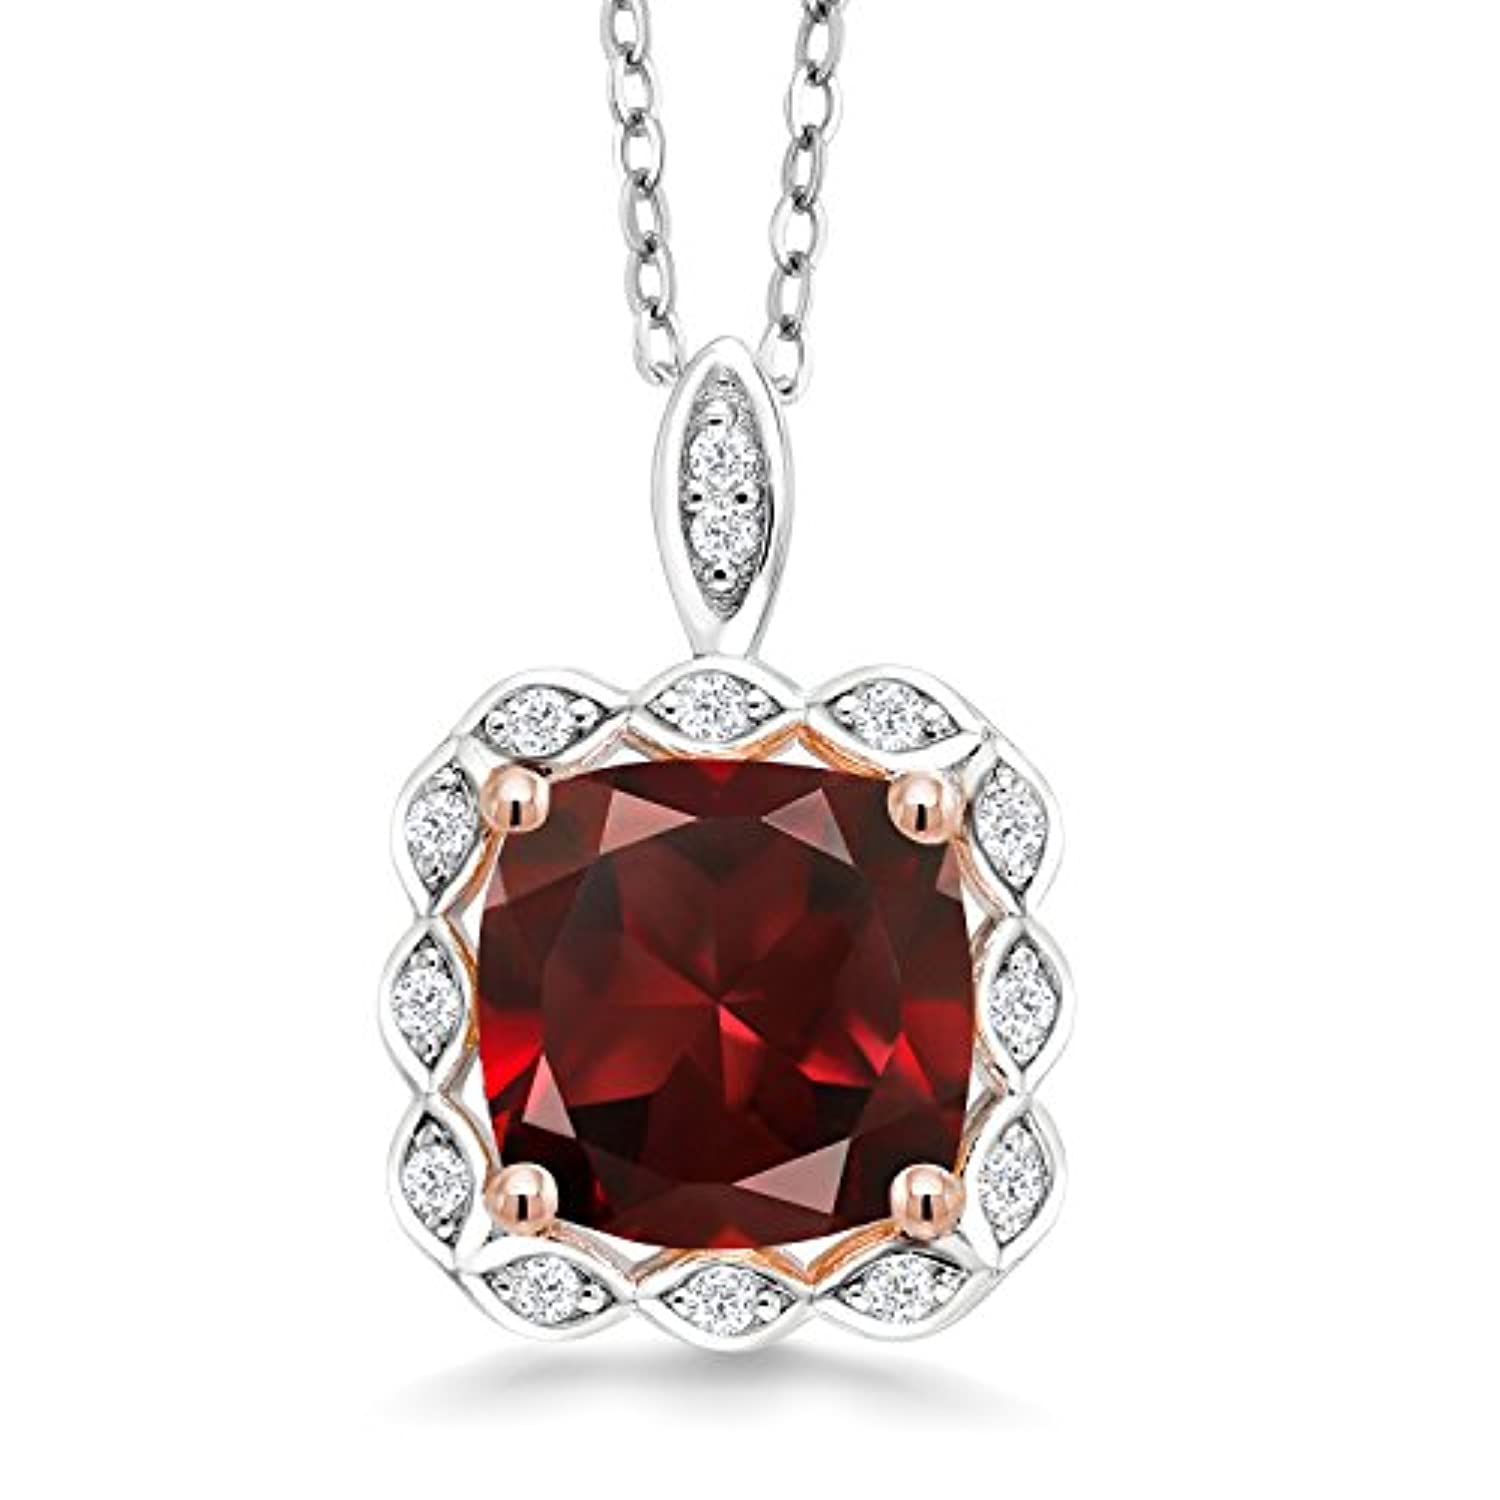 Red Garnet Pendant Necklace